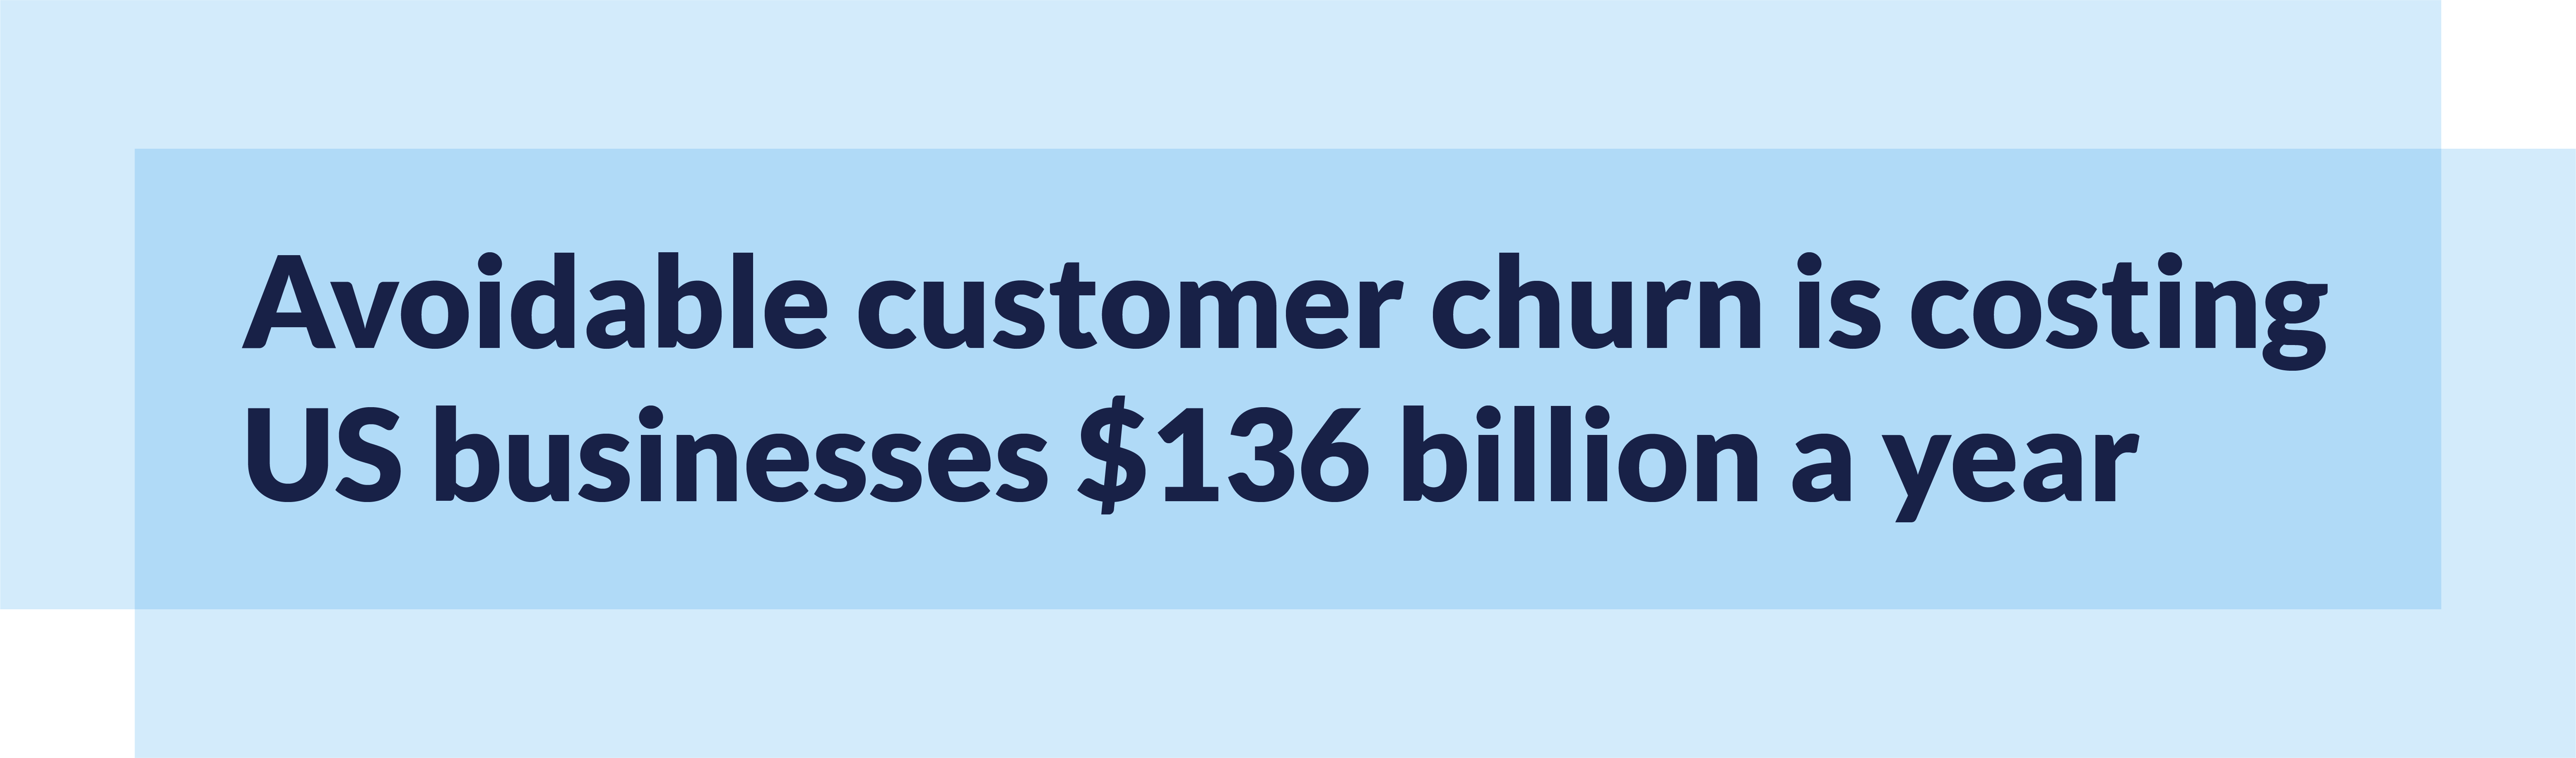 Stat on customer churn